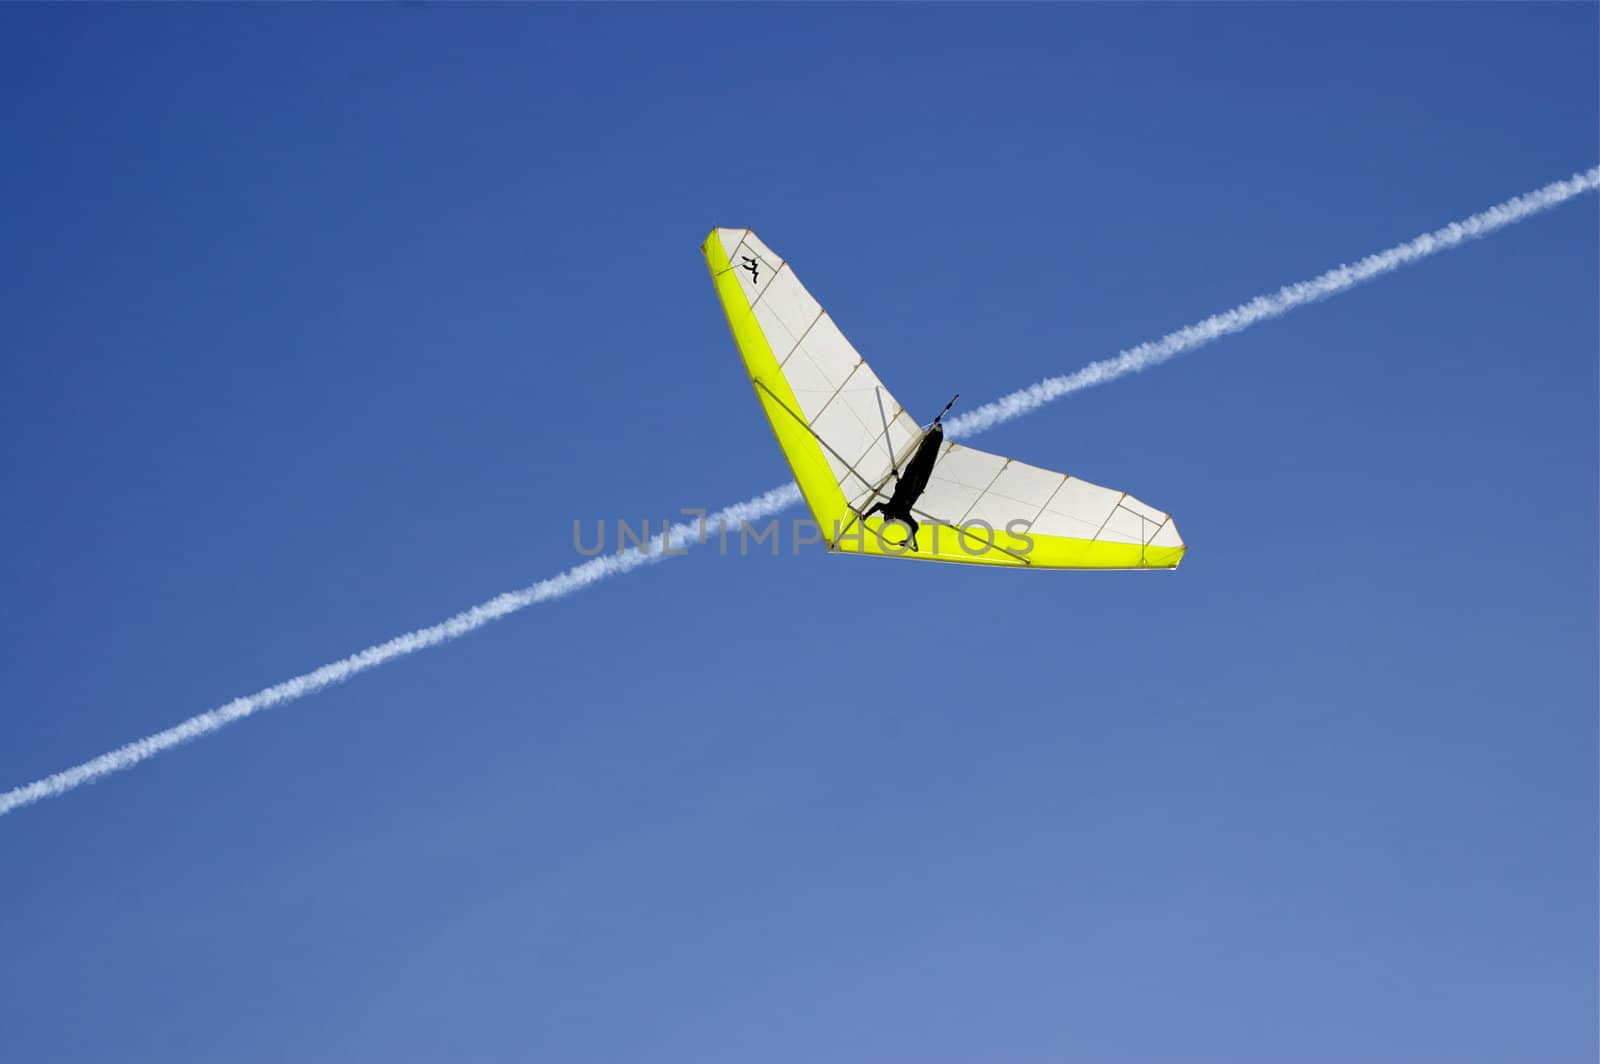 Hang Glider Against Deep Blue Sky by PrincessToula